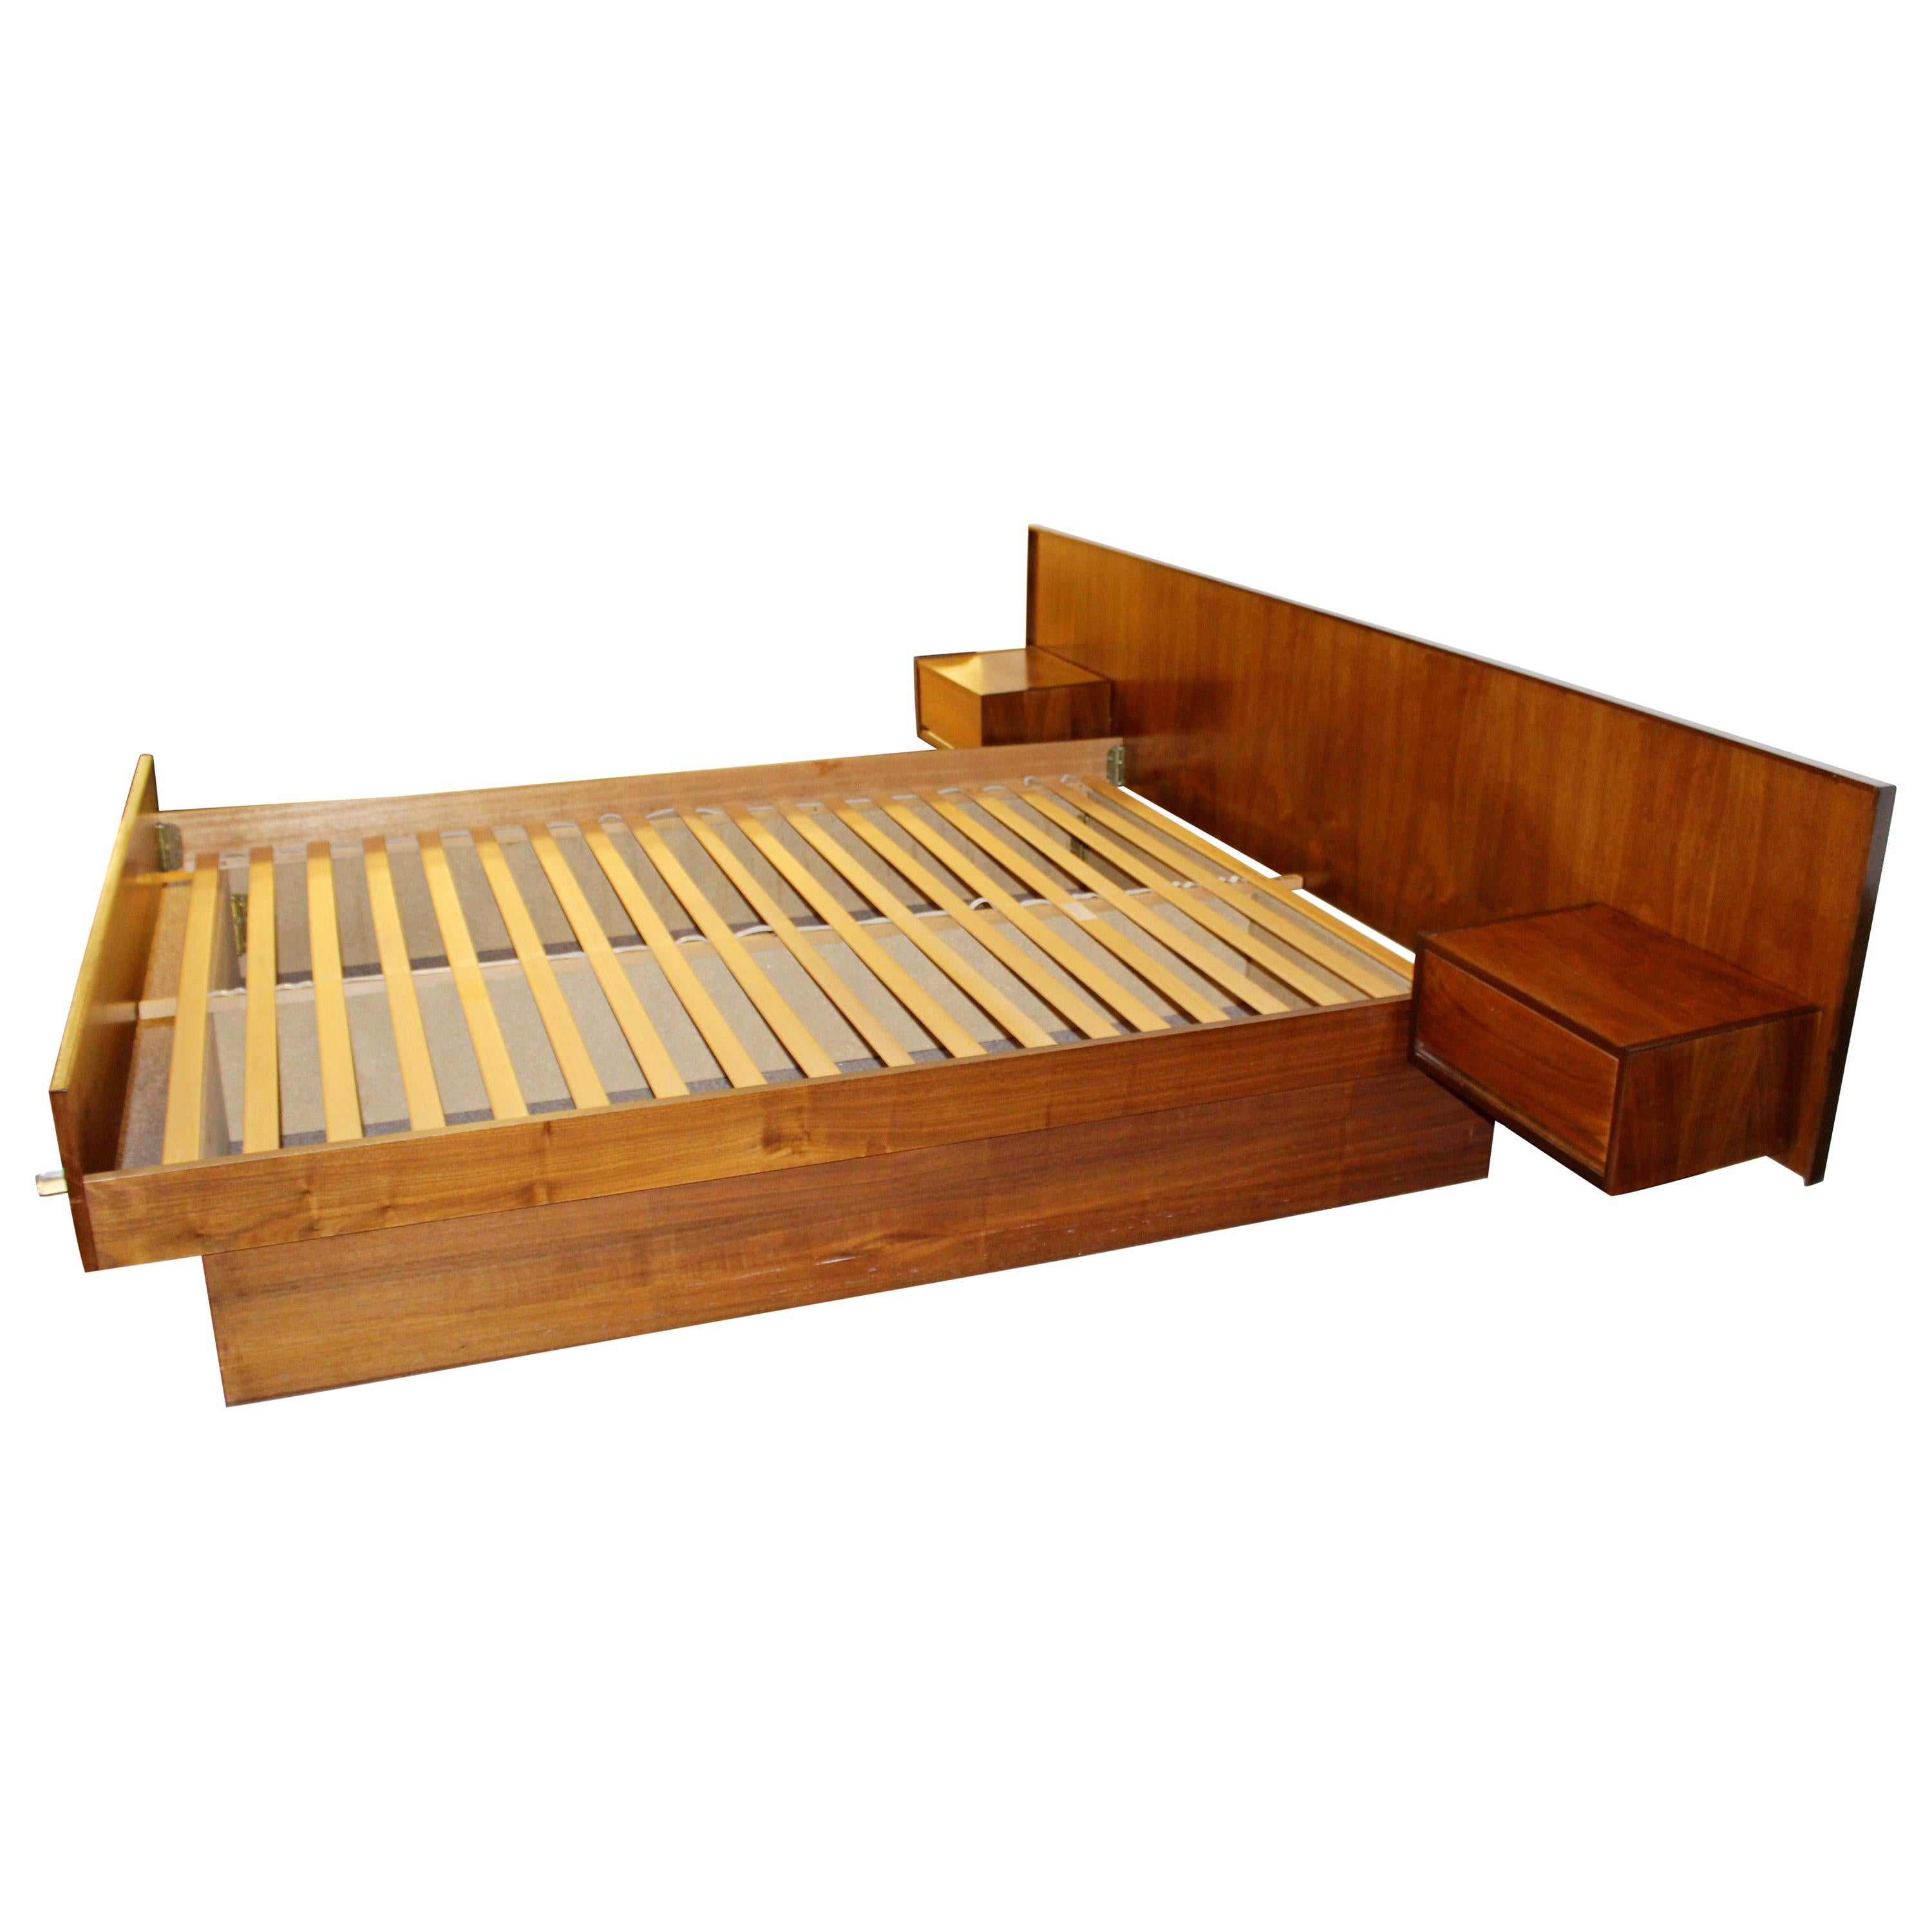 Queen Bed With Floating Nightstands, Danish Design Bed Frame